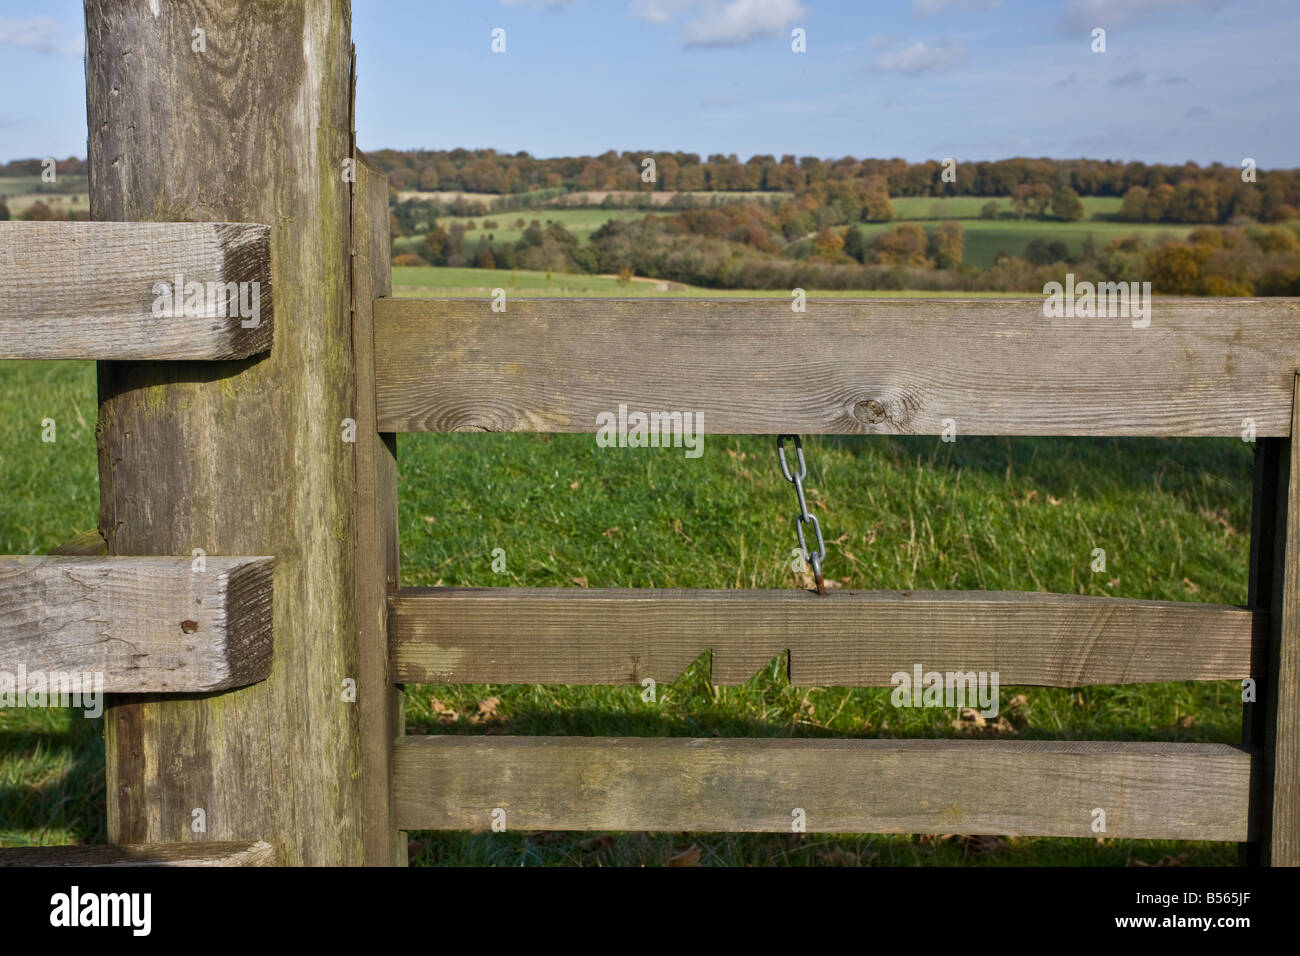 traditional farm gate swing latch Stock Photo